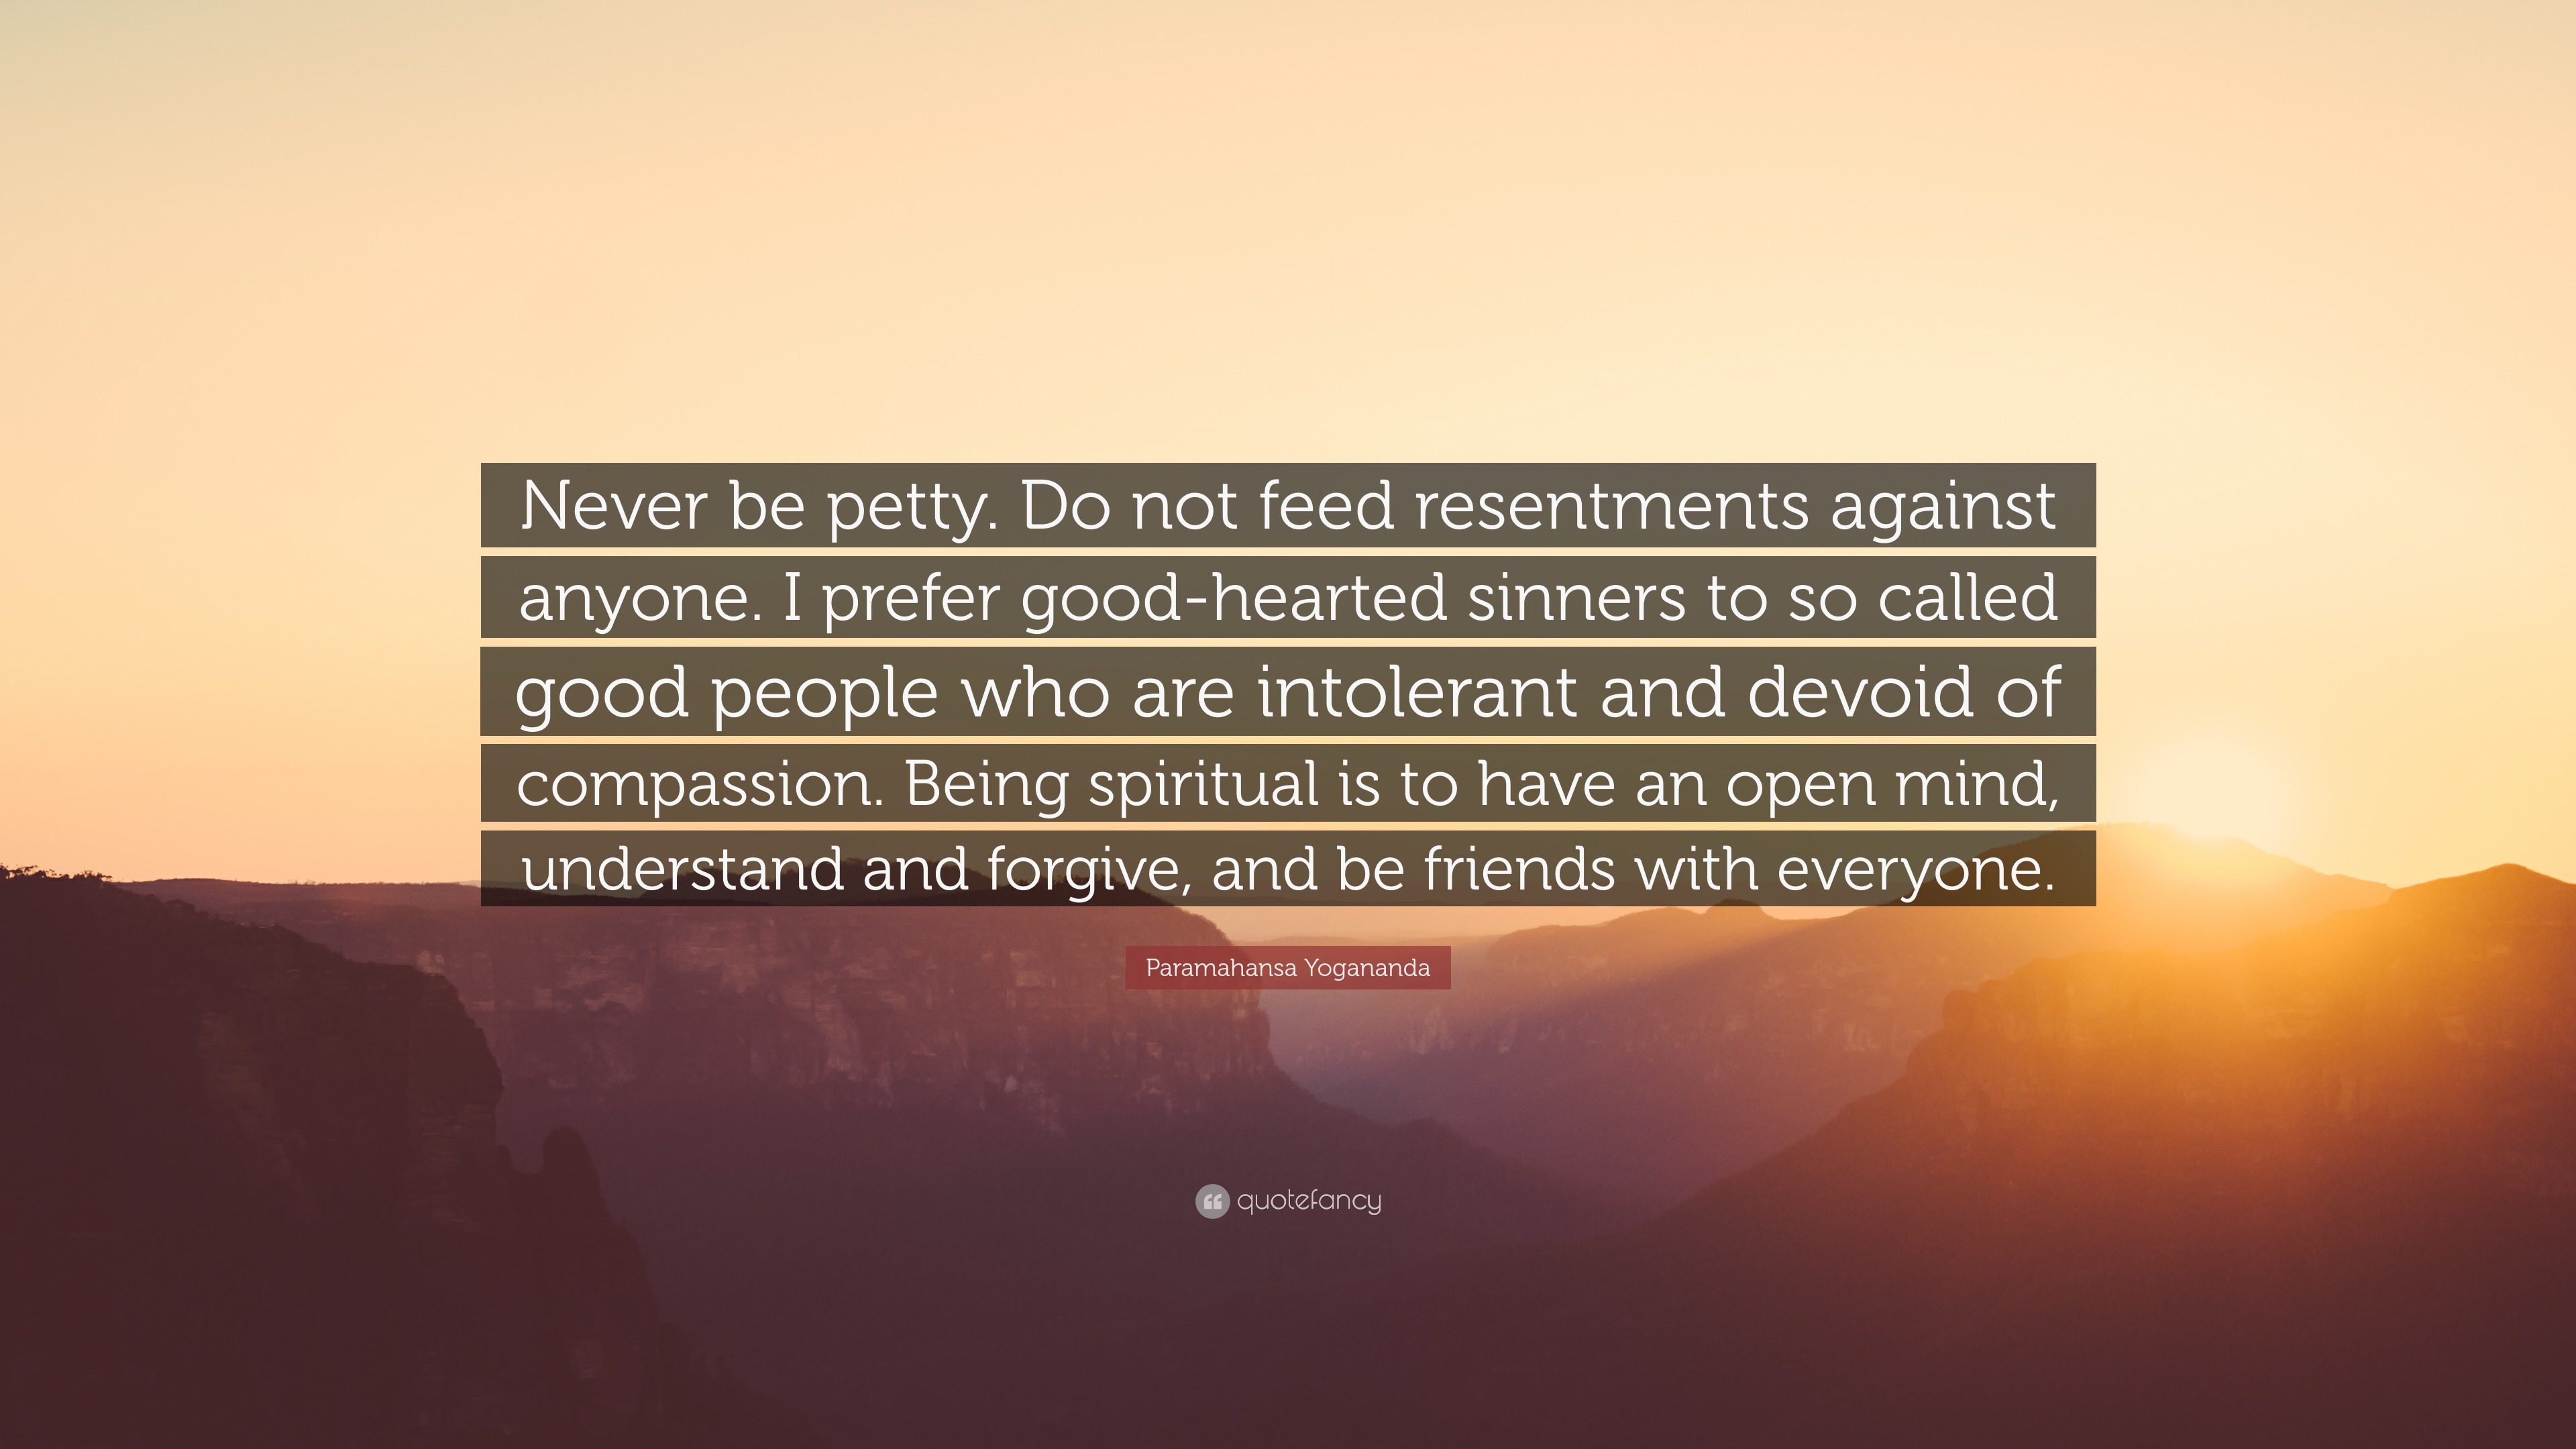 Paramahansa Yogananda Quote: "Never be petty. 